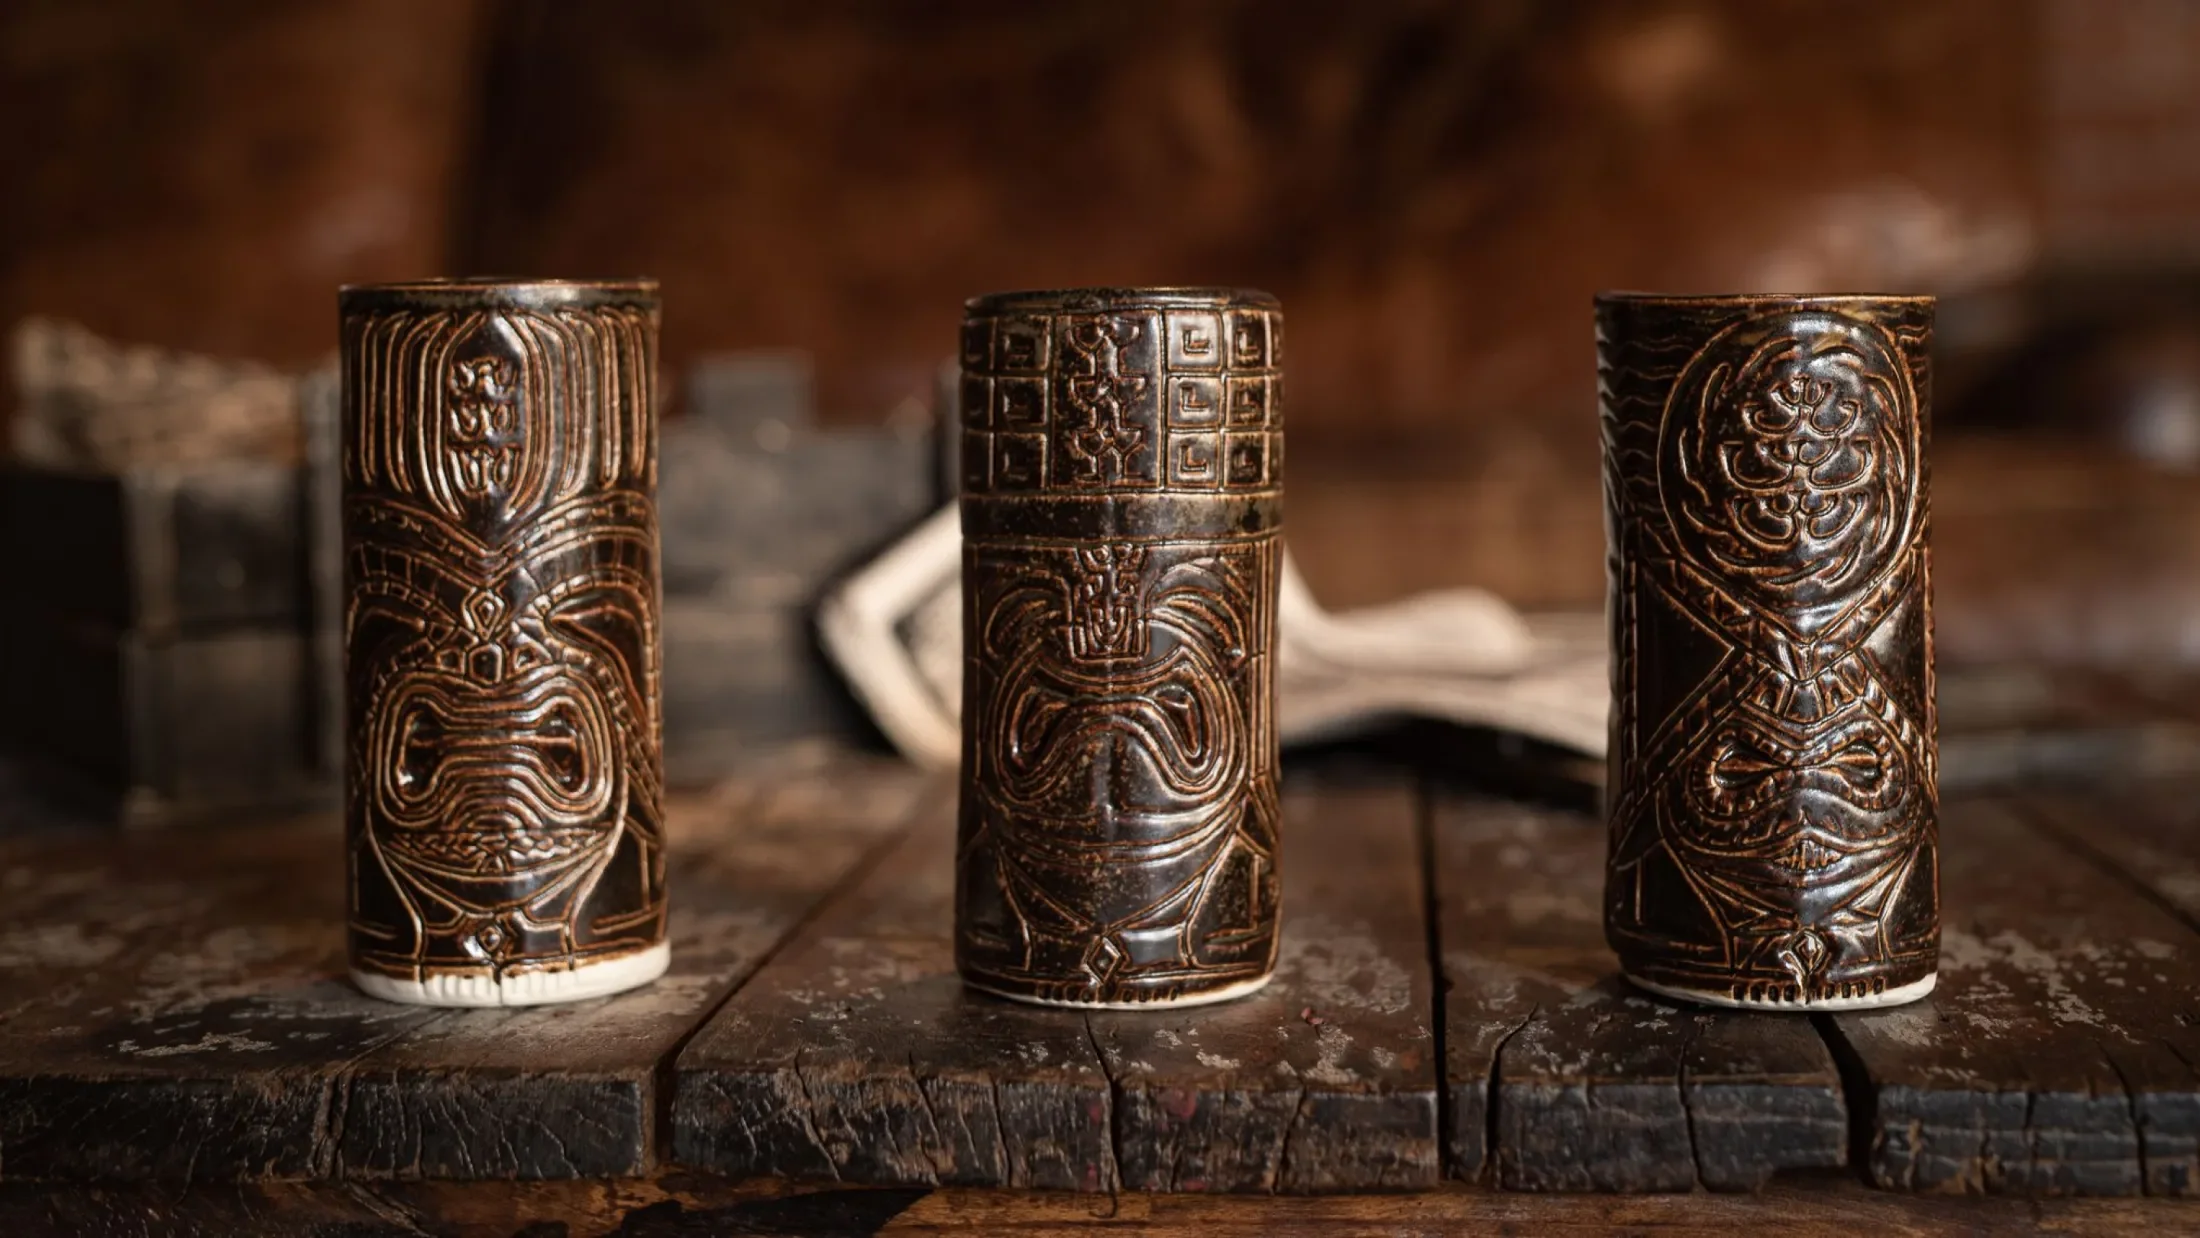 All three tiki mugs facing forward on a wooden table